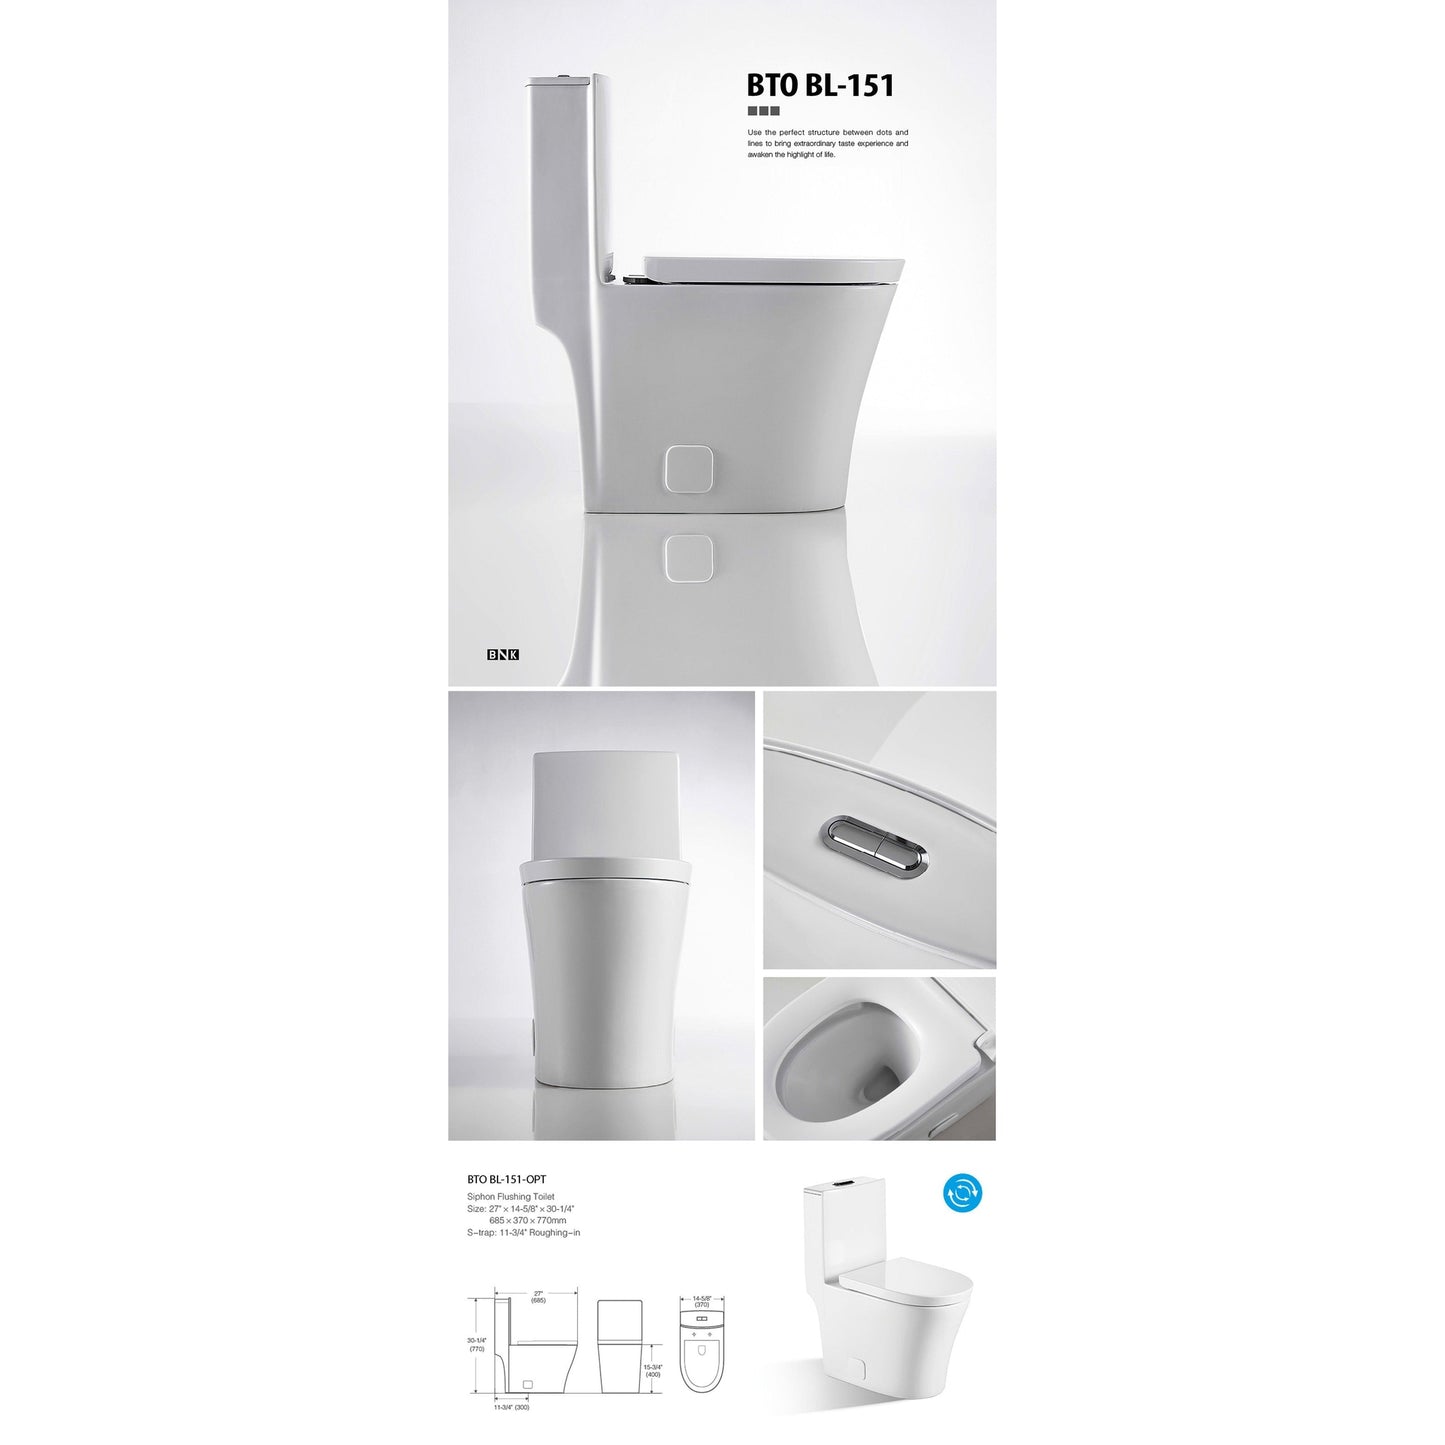 BNK BTO BL-151 Siphon Flushing Toilet